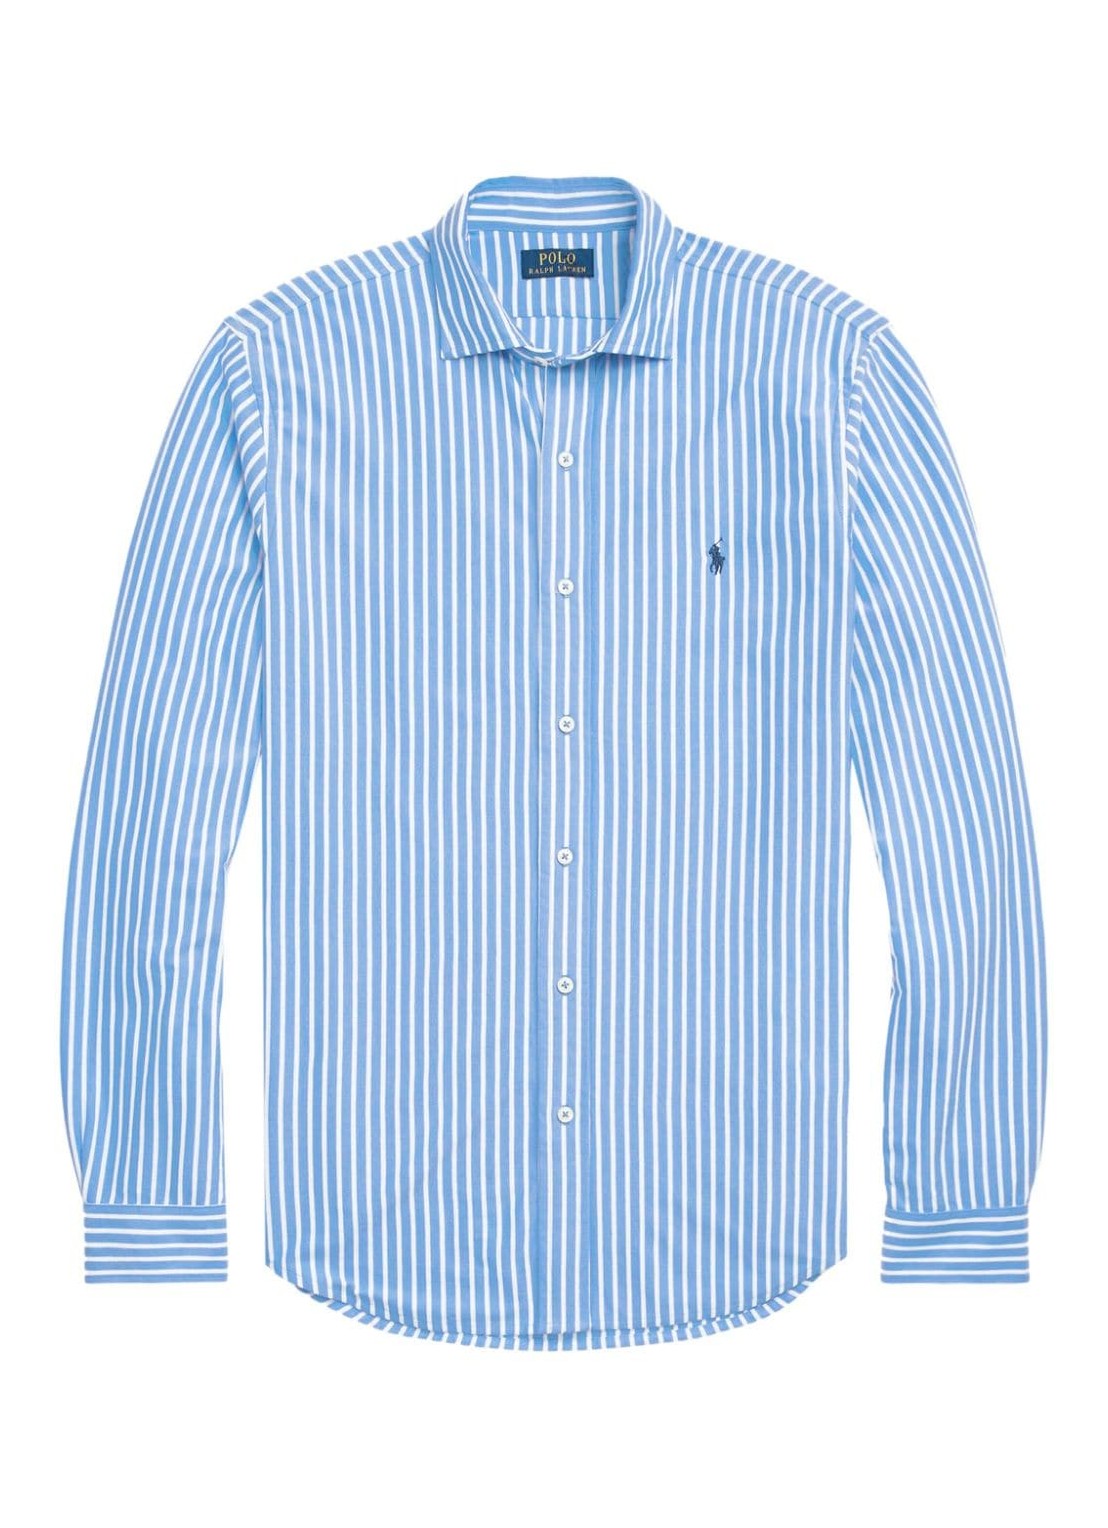 Camiseria polo ralph lauren shirt man lsfbestm3-long sleeve-sport shirt 710899074004 harbor island b